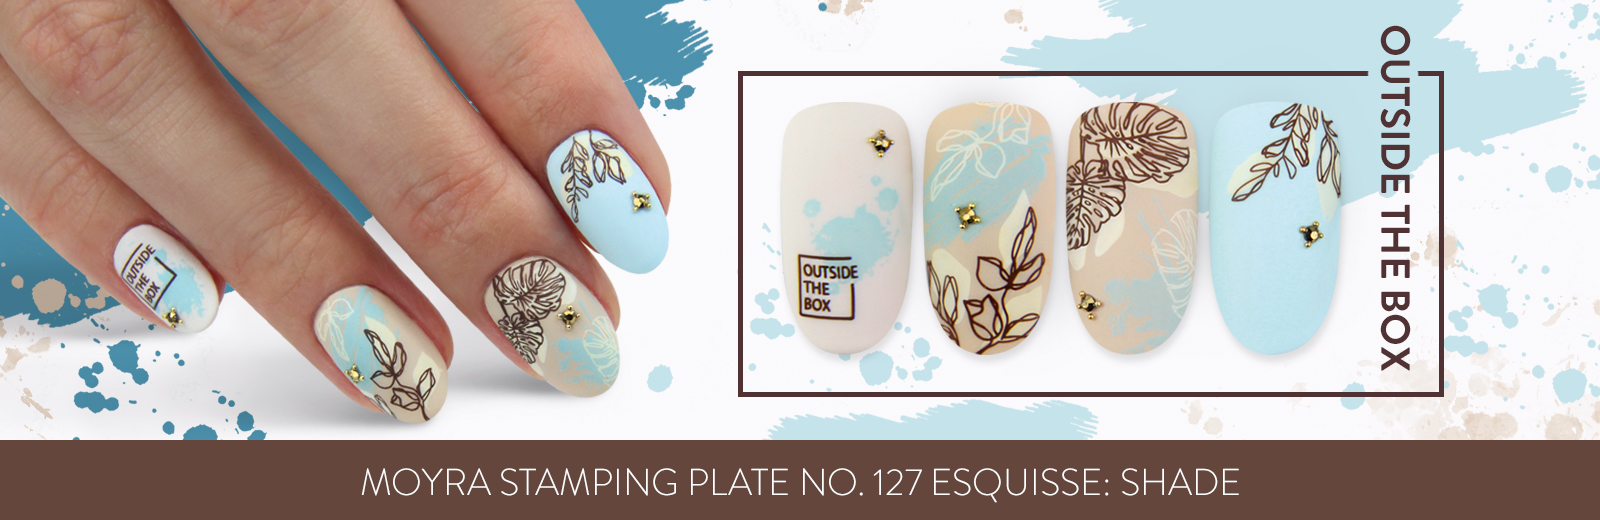 Moyra スタンピングプレート Stamping plate 127 Esquisse: shade